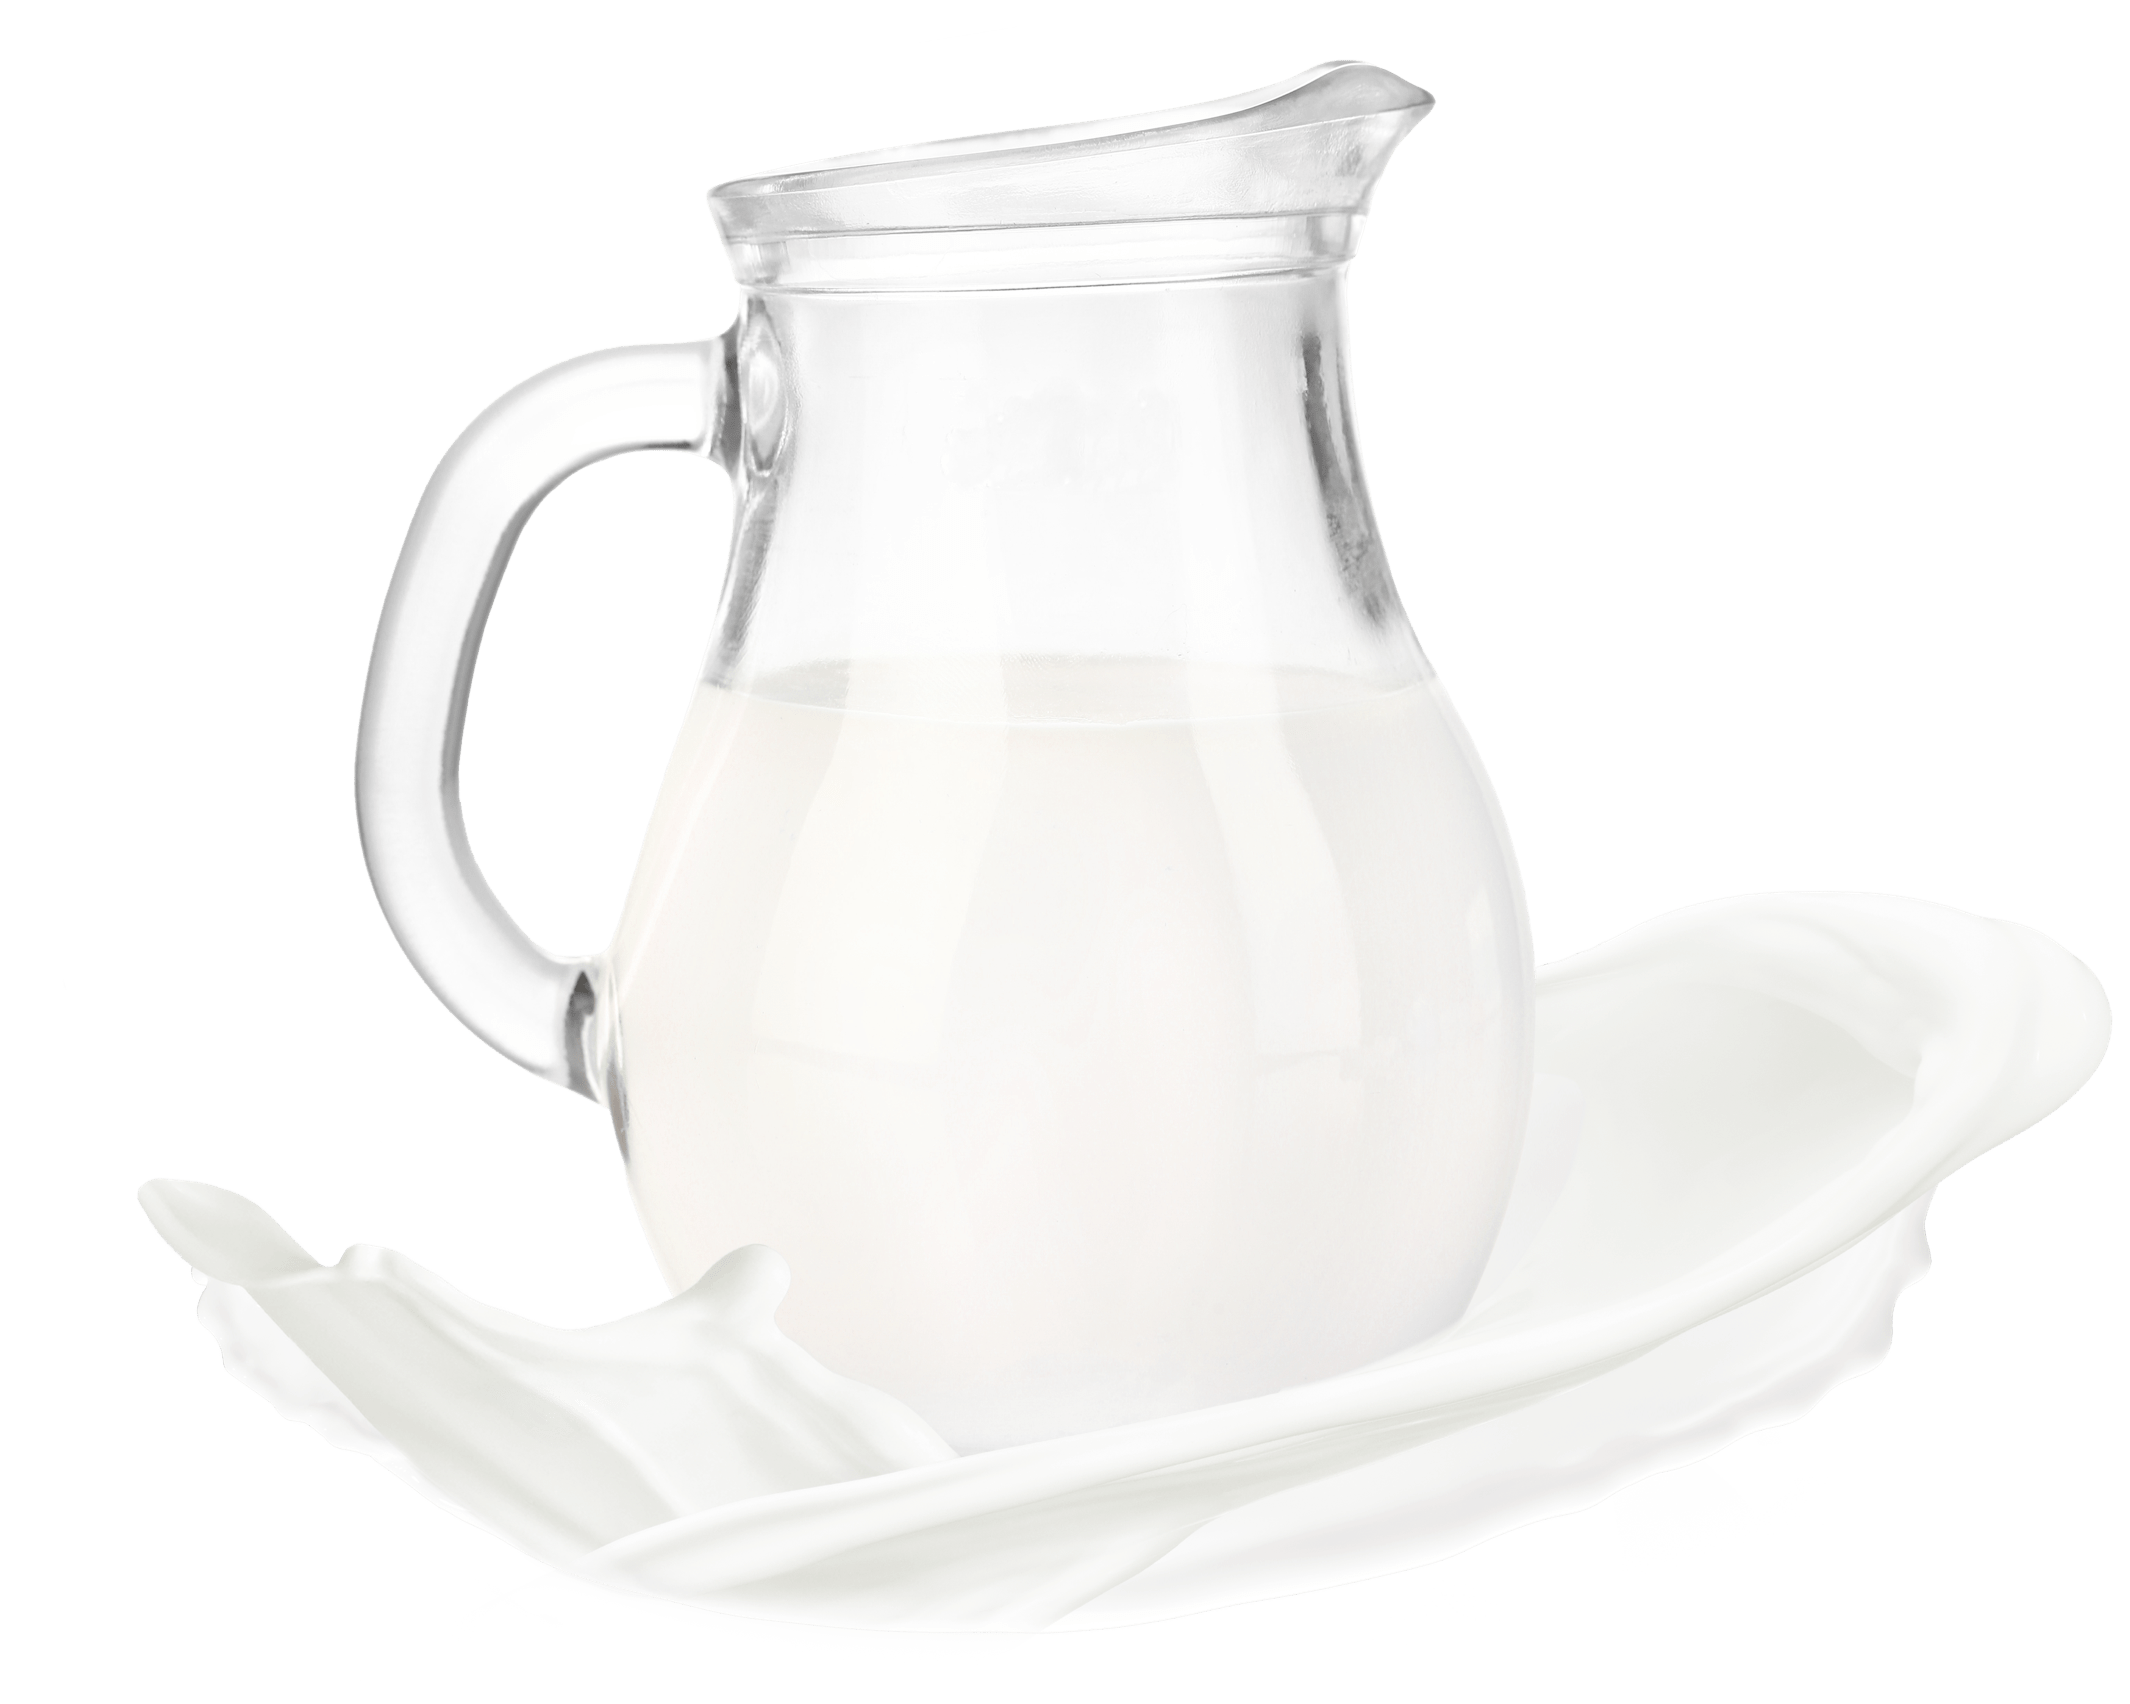 Jug of buttermilk